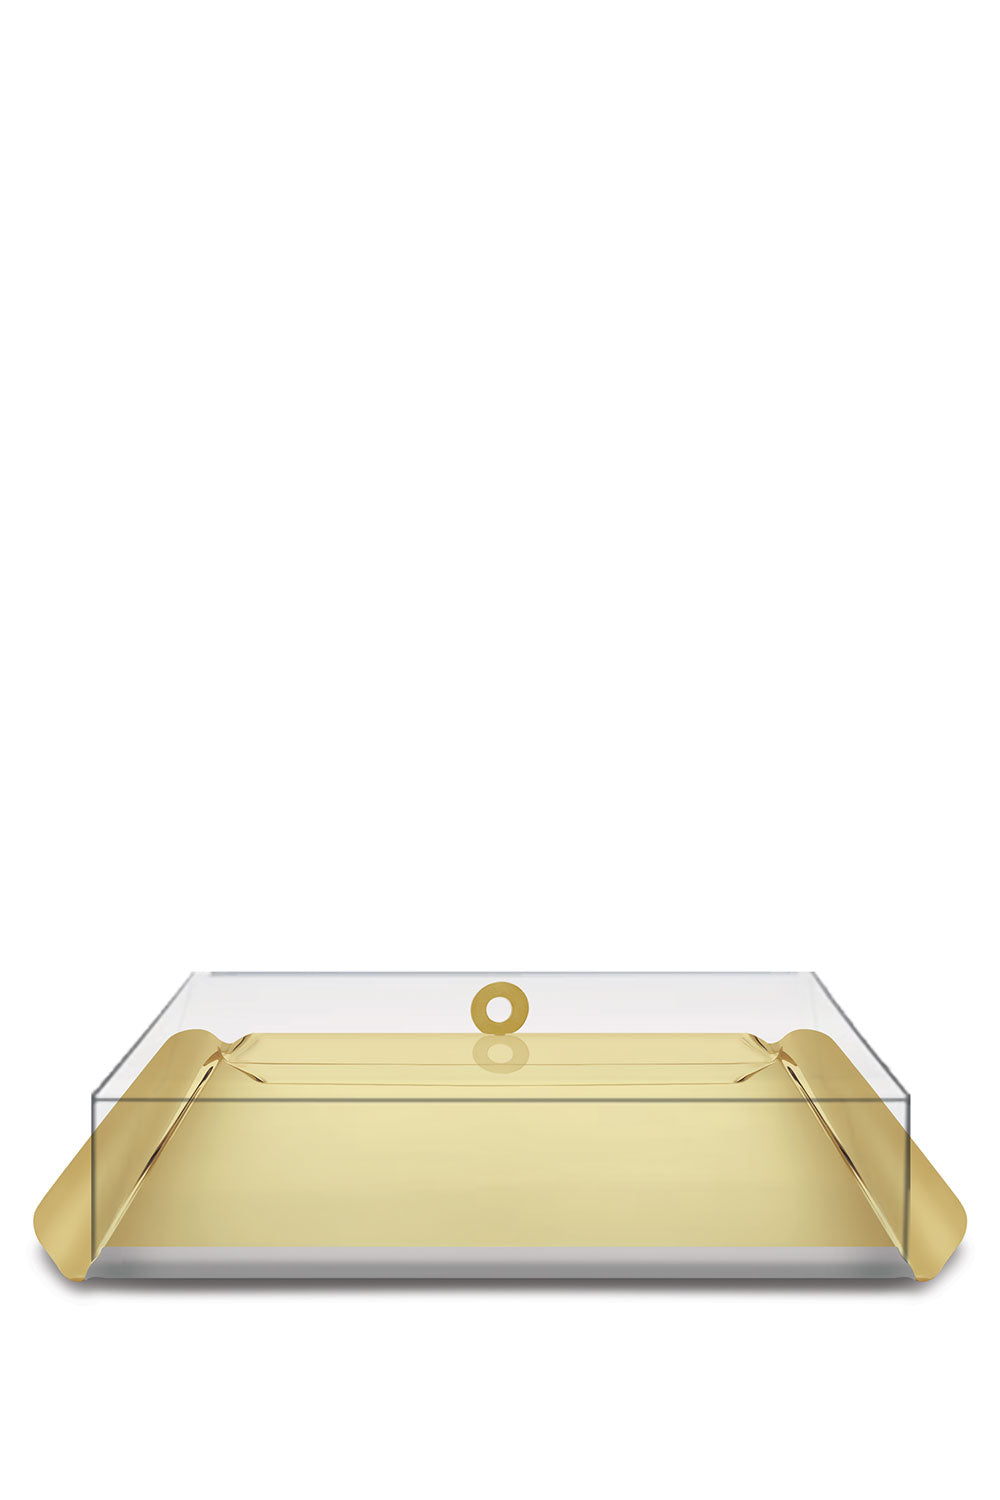 Deluxe Medium Tray, Gold, 42x30cm